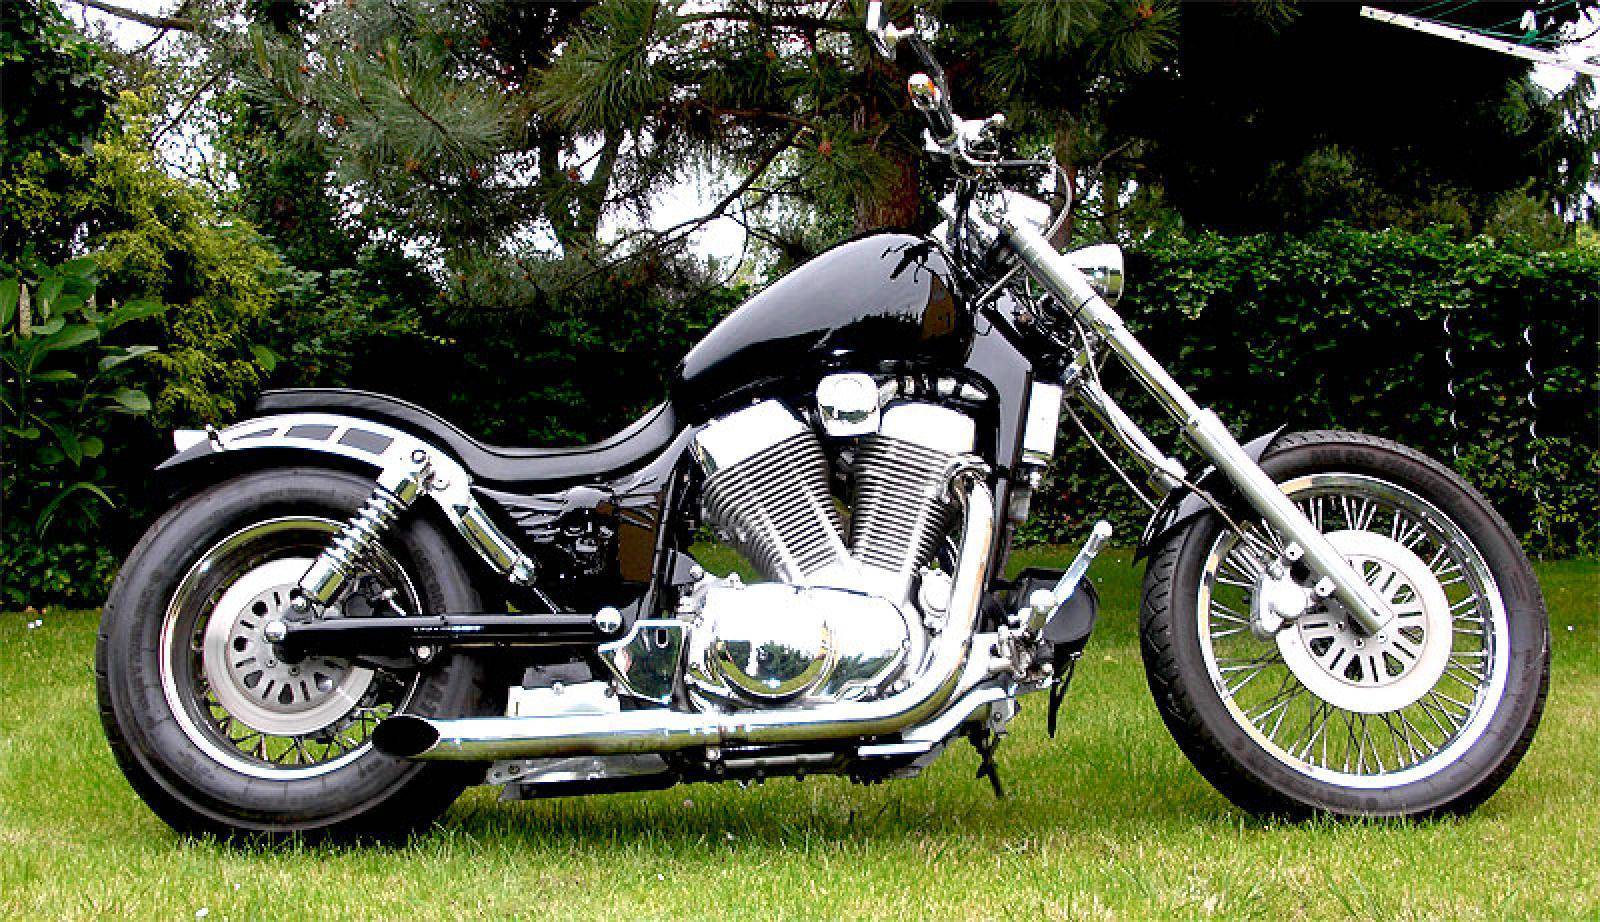 Обзор мотоцикла suzuki intruder 1400 (vs 1400, boulevard s83) — bikeswiki - энциклопедия японских мотоциклов